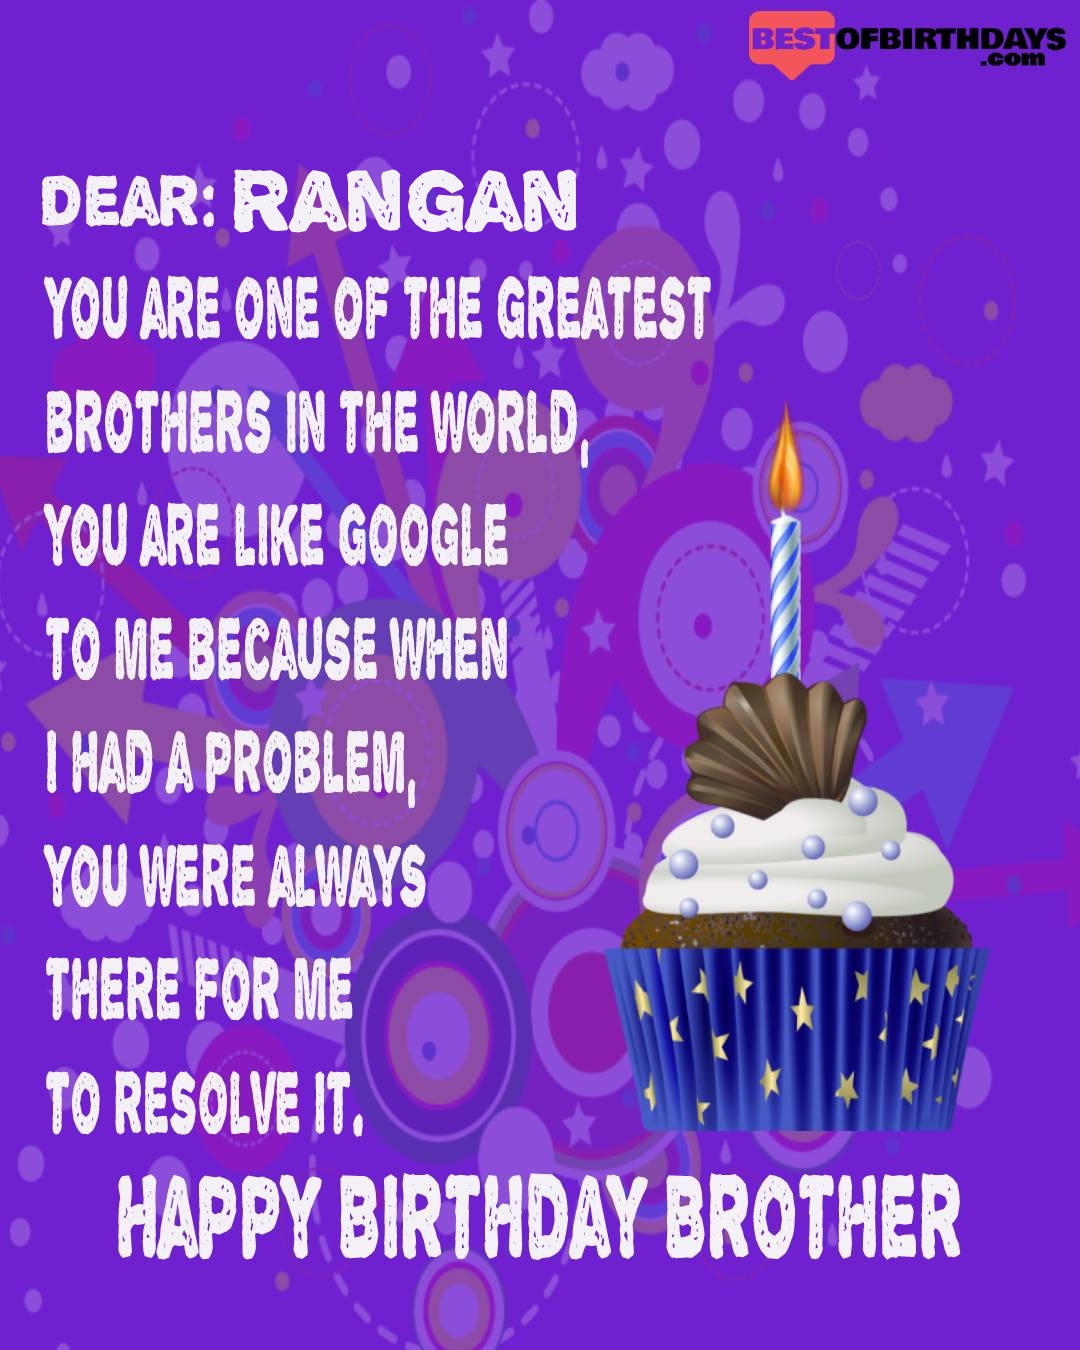 Happy birthday rangan bhai brother bro